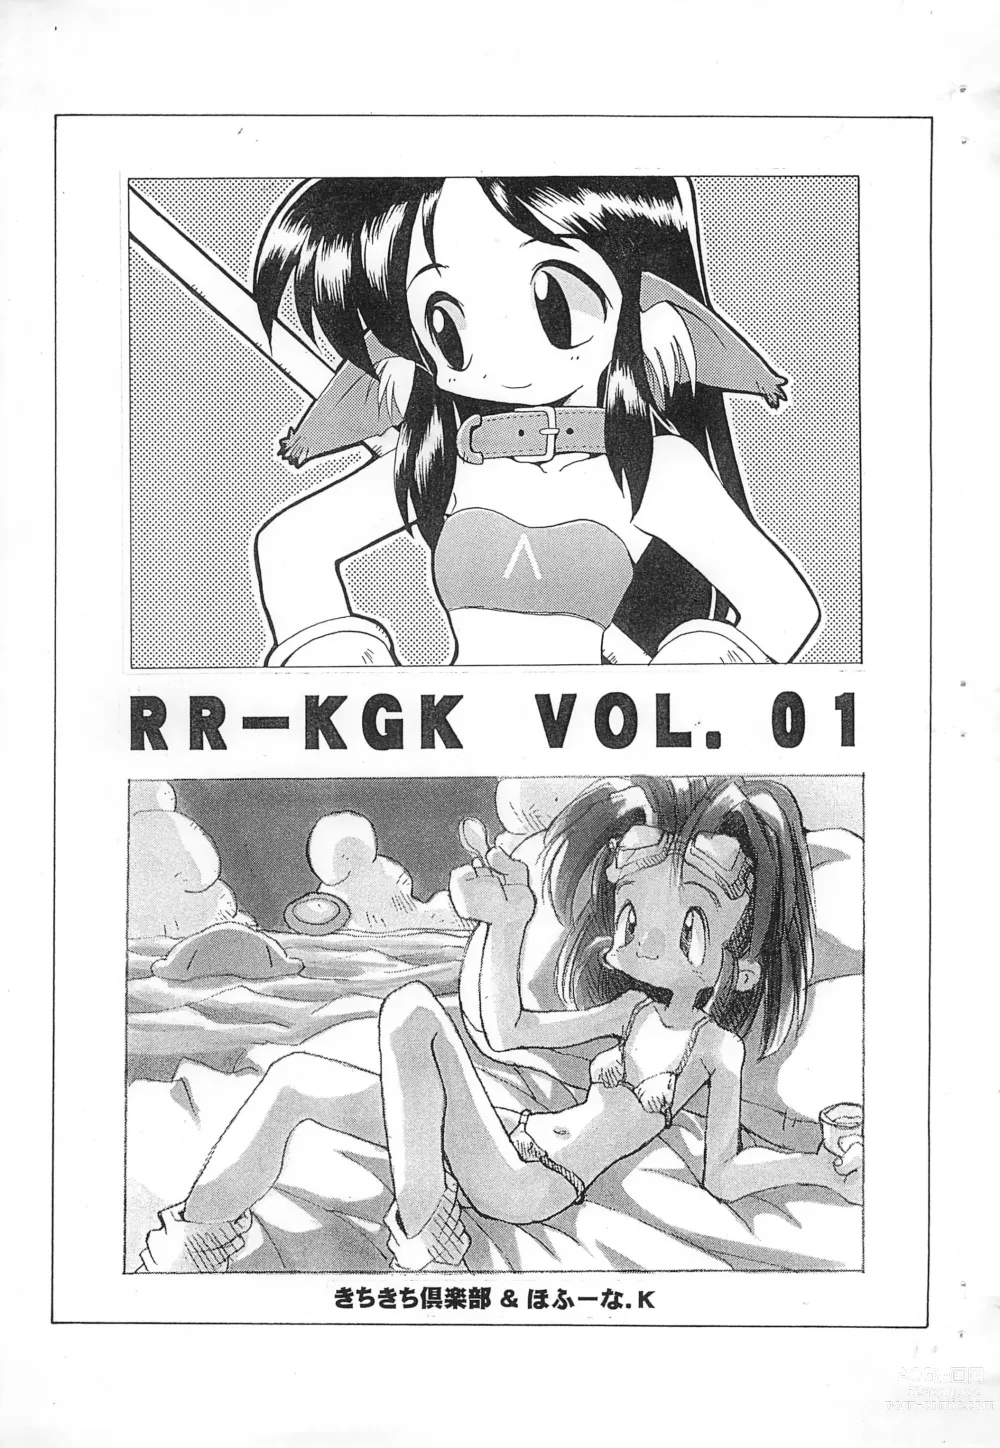 Page 1 of doujinshi RR-KGK VOL.01